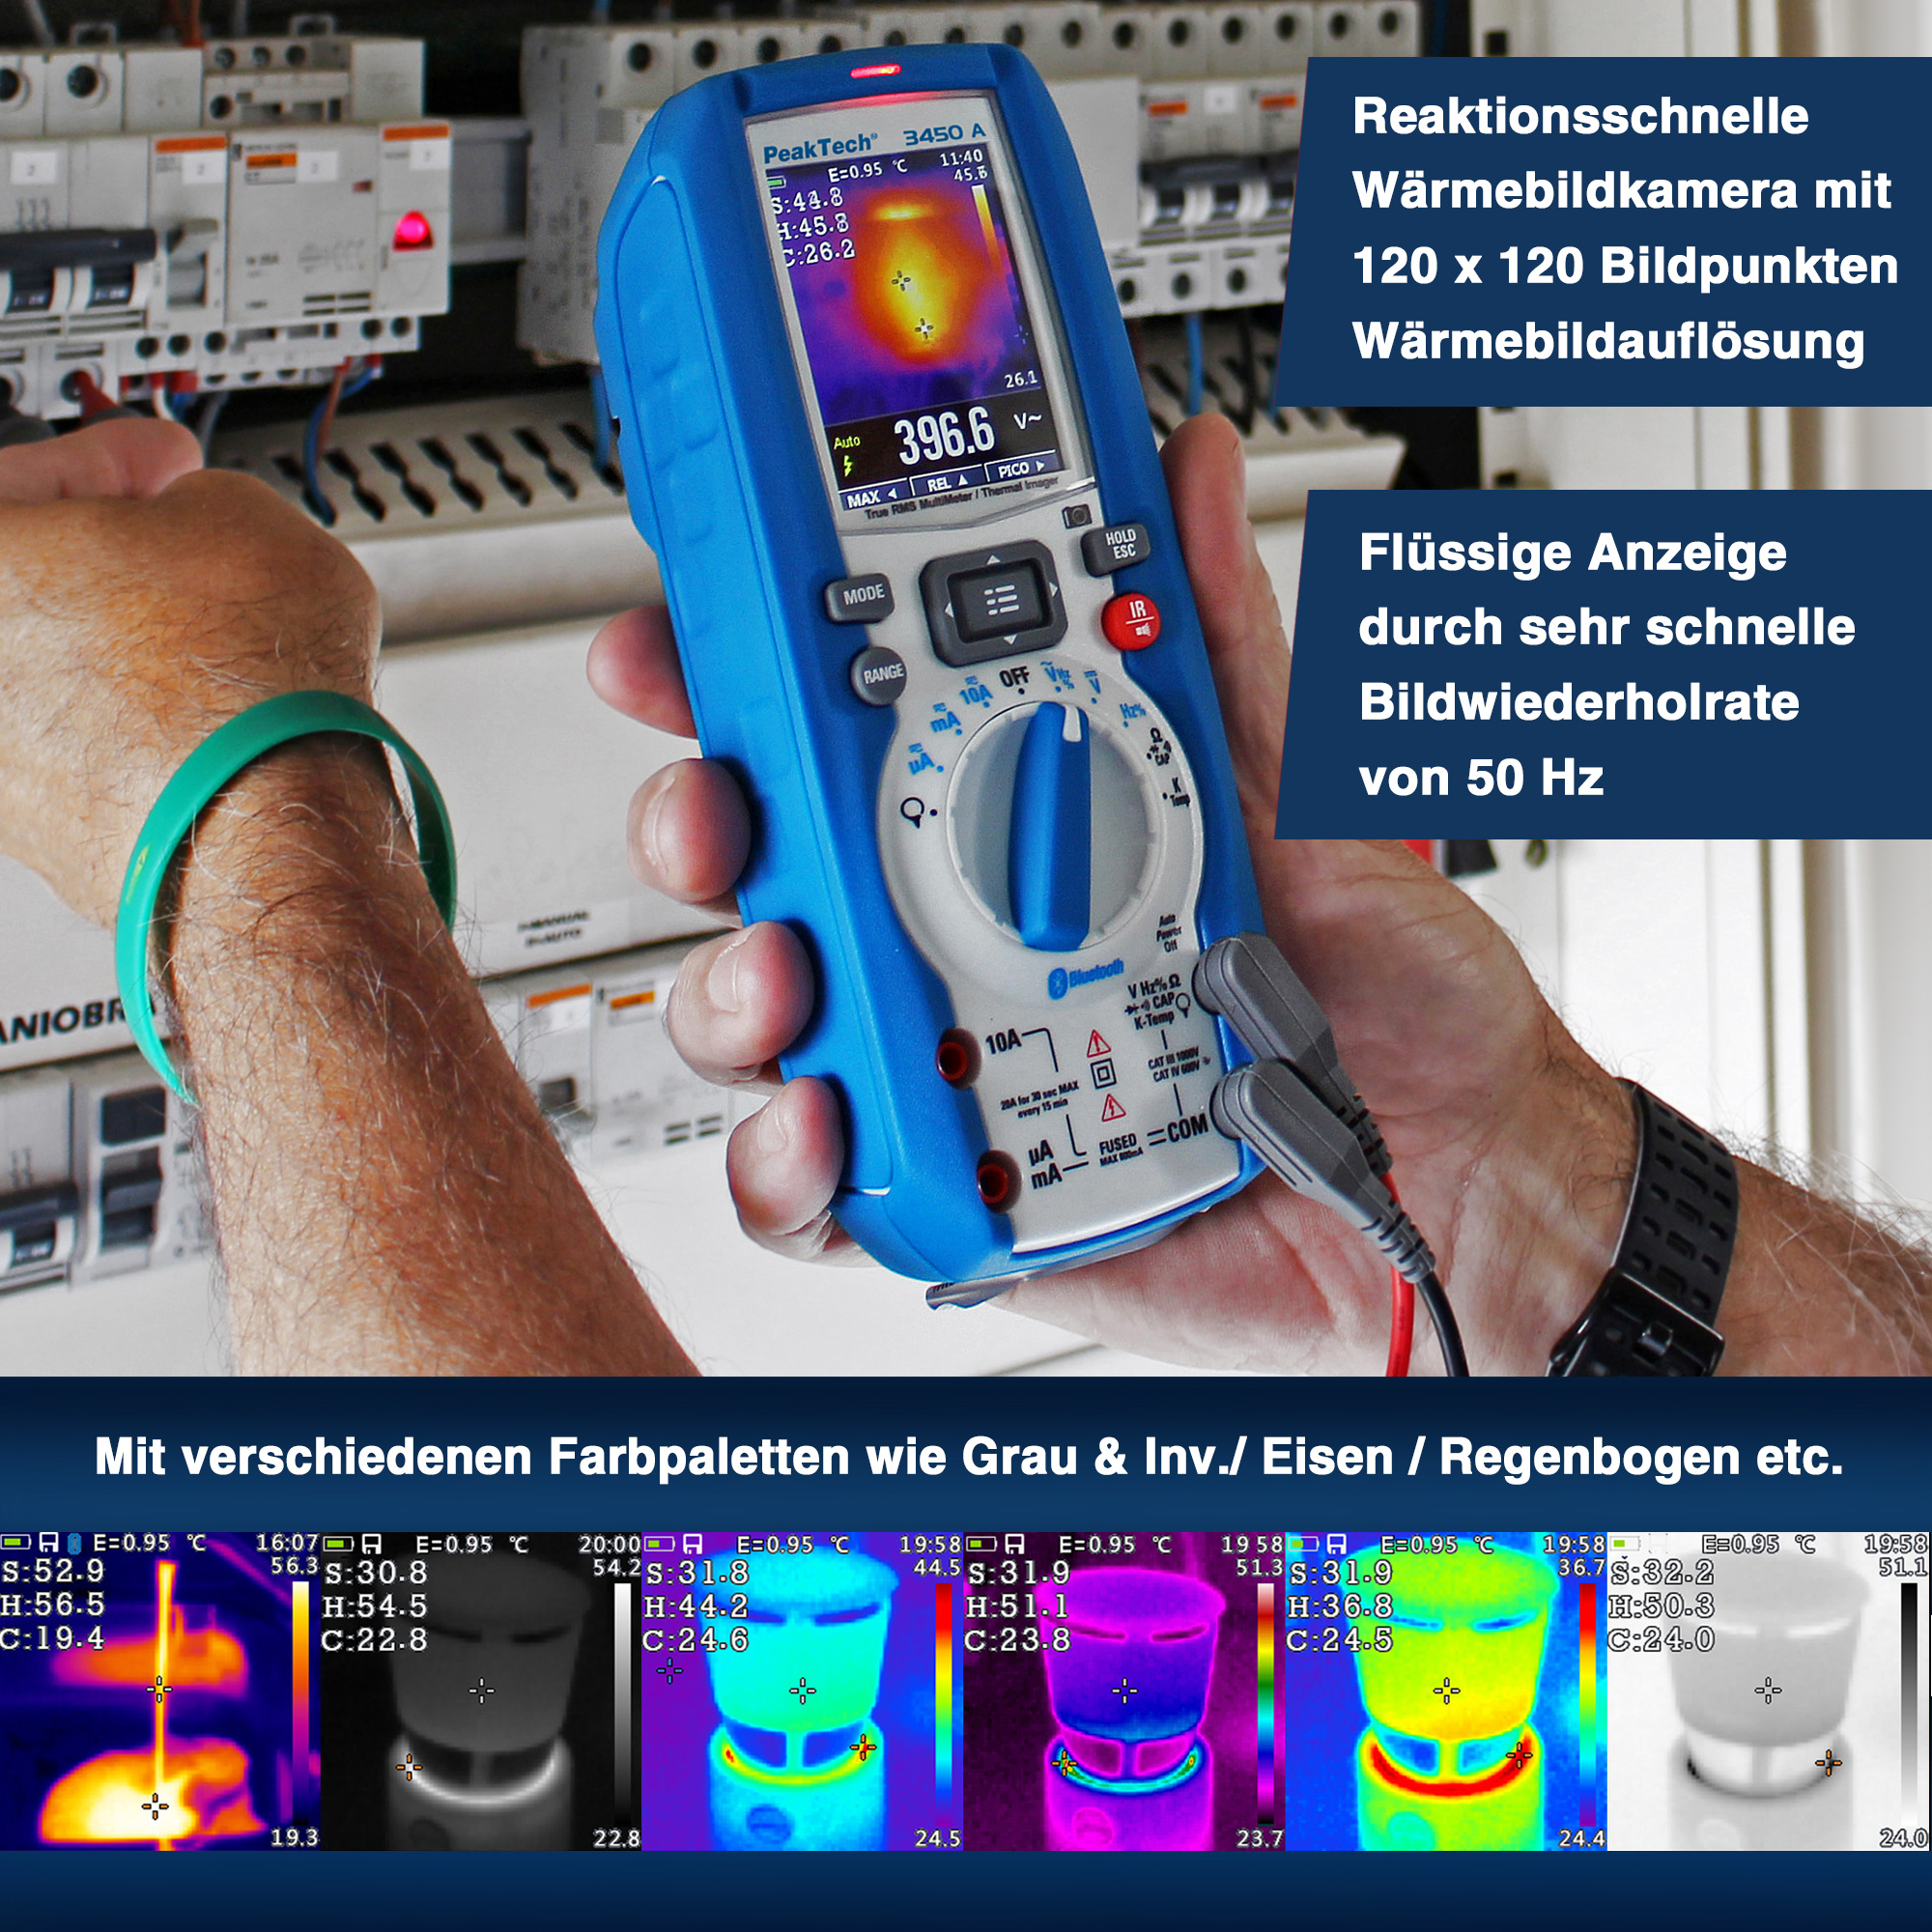 «PeakTech® P 3450 A» True RMS Grafikmultimeter mit Wärmebildkamera